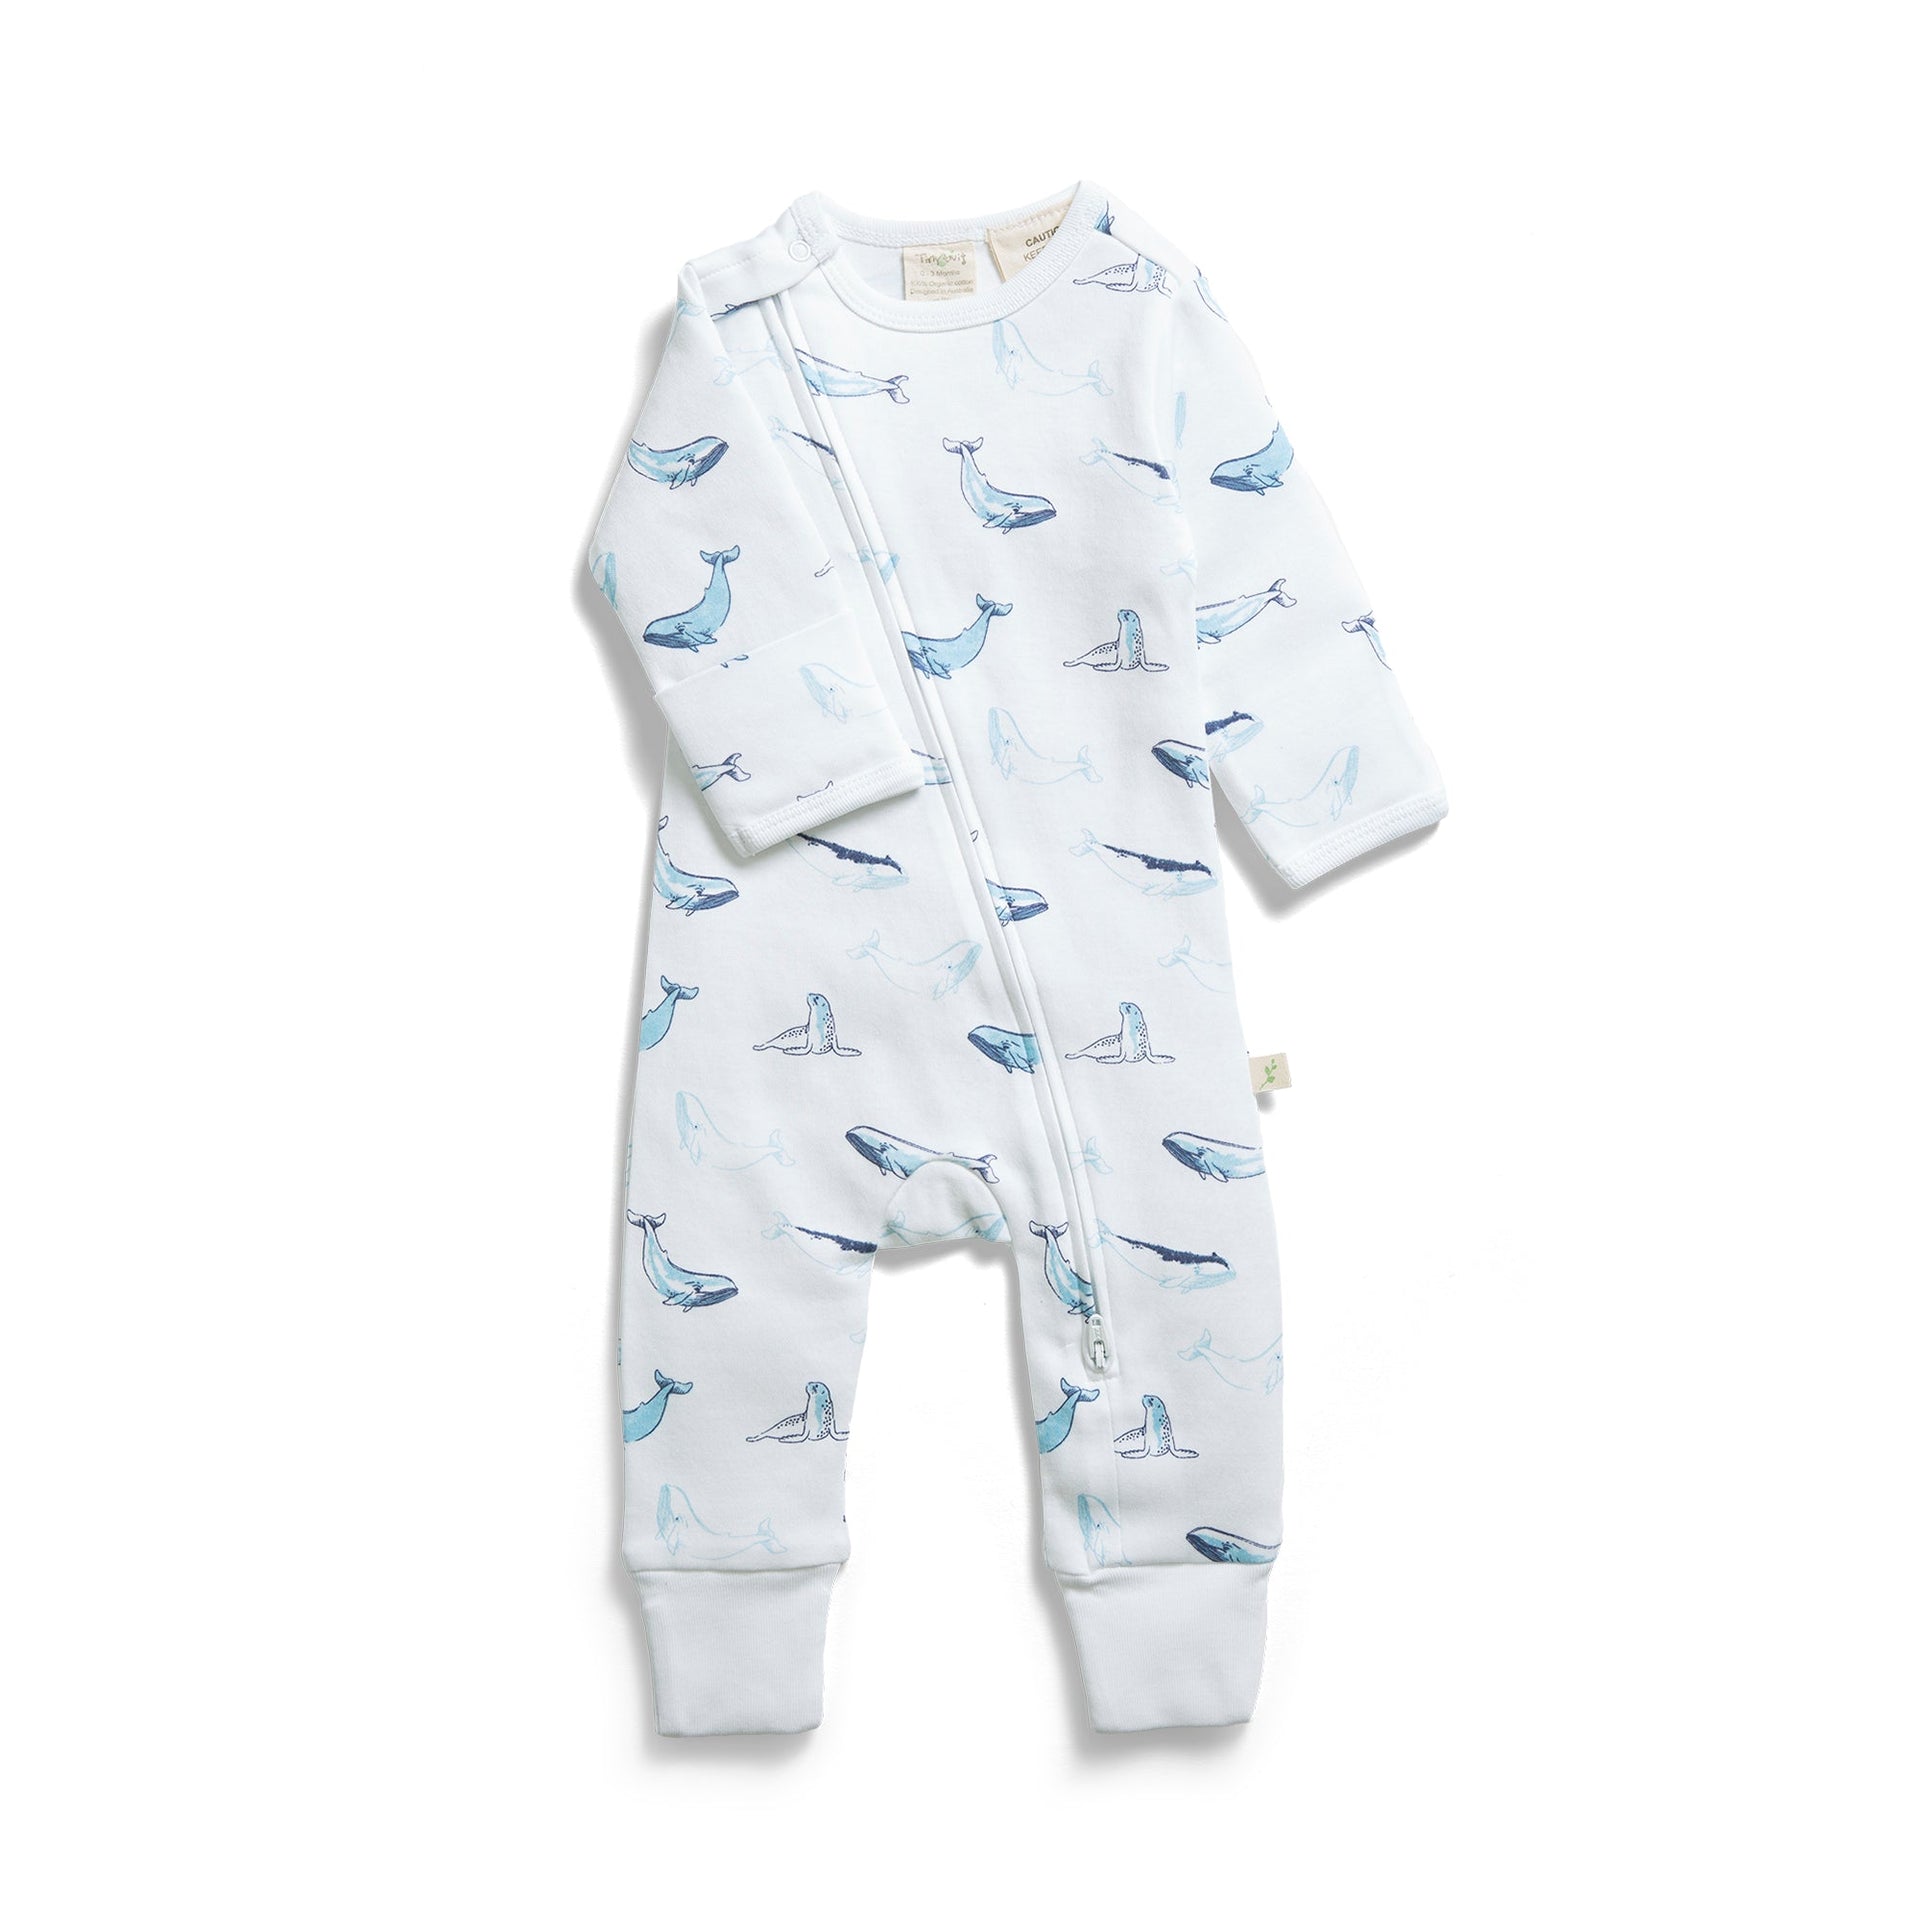 Baby Zipsuits - Organic Cotton Baby Clothing | Tiny Twig Australia